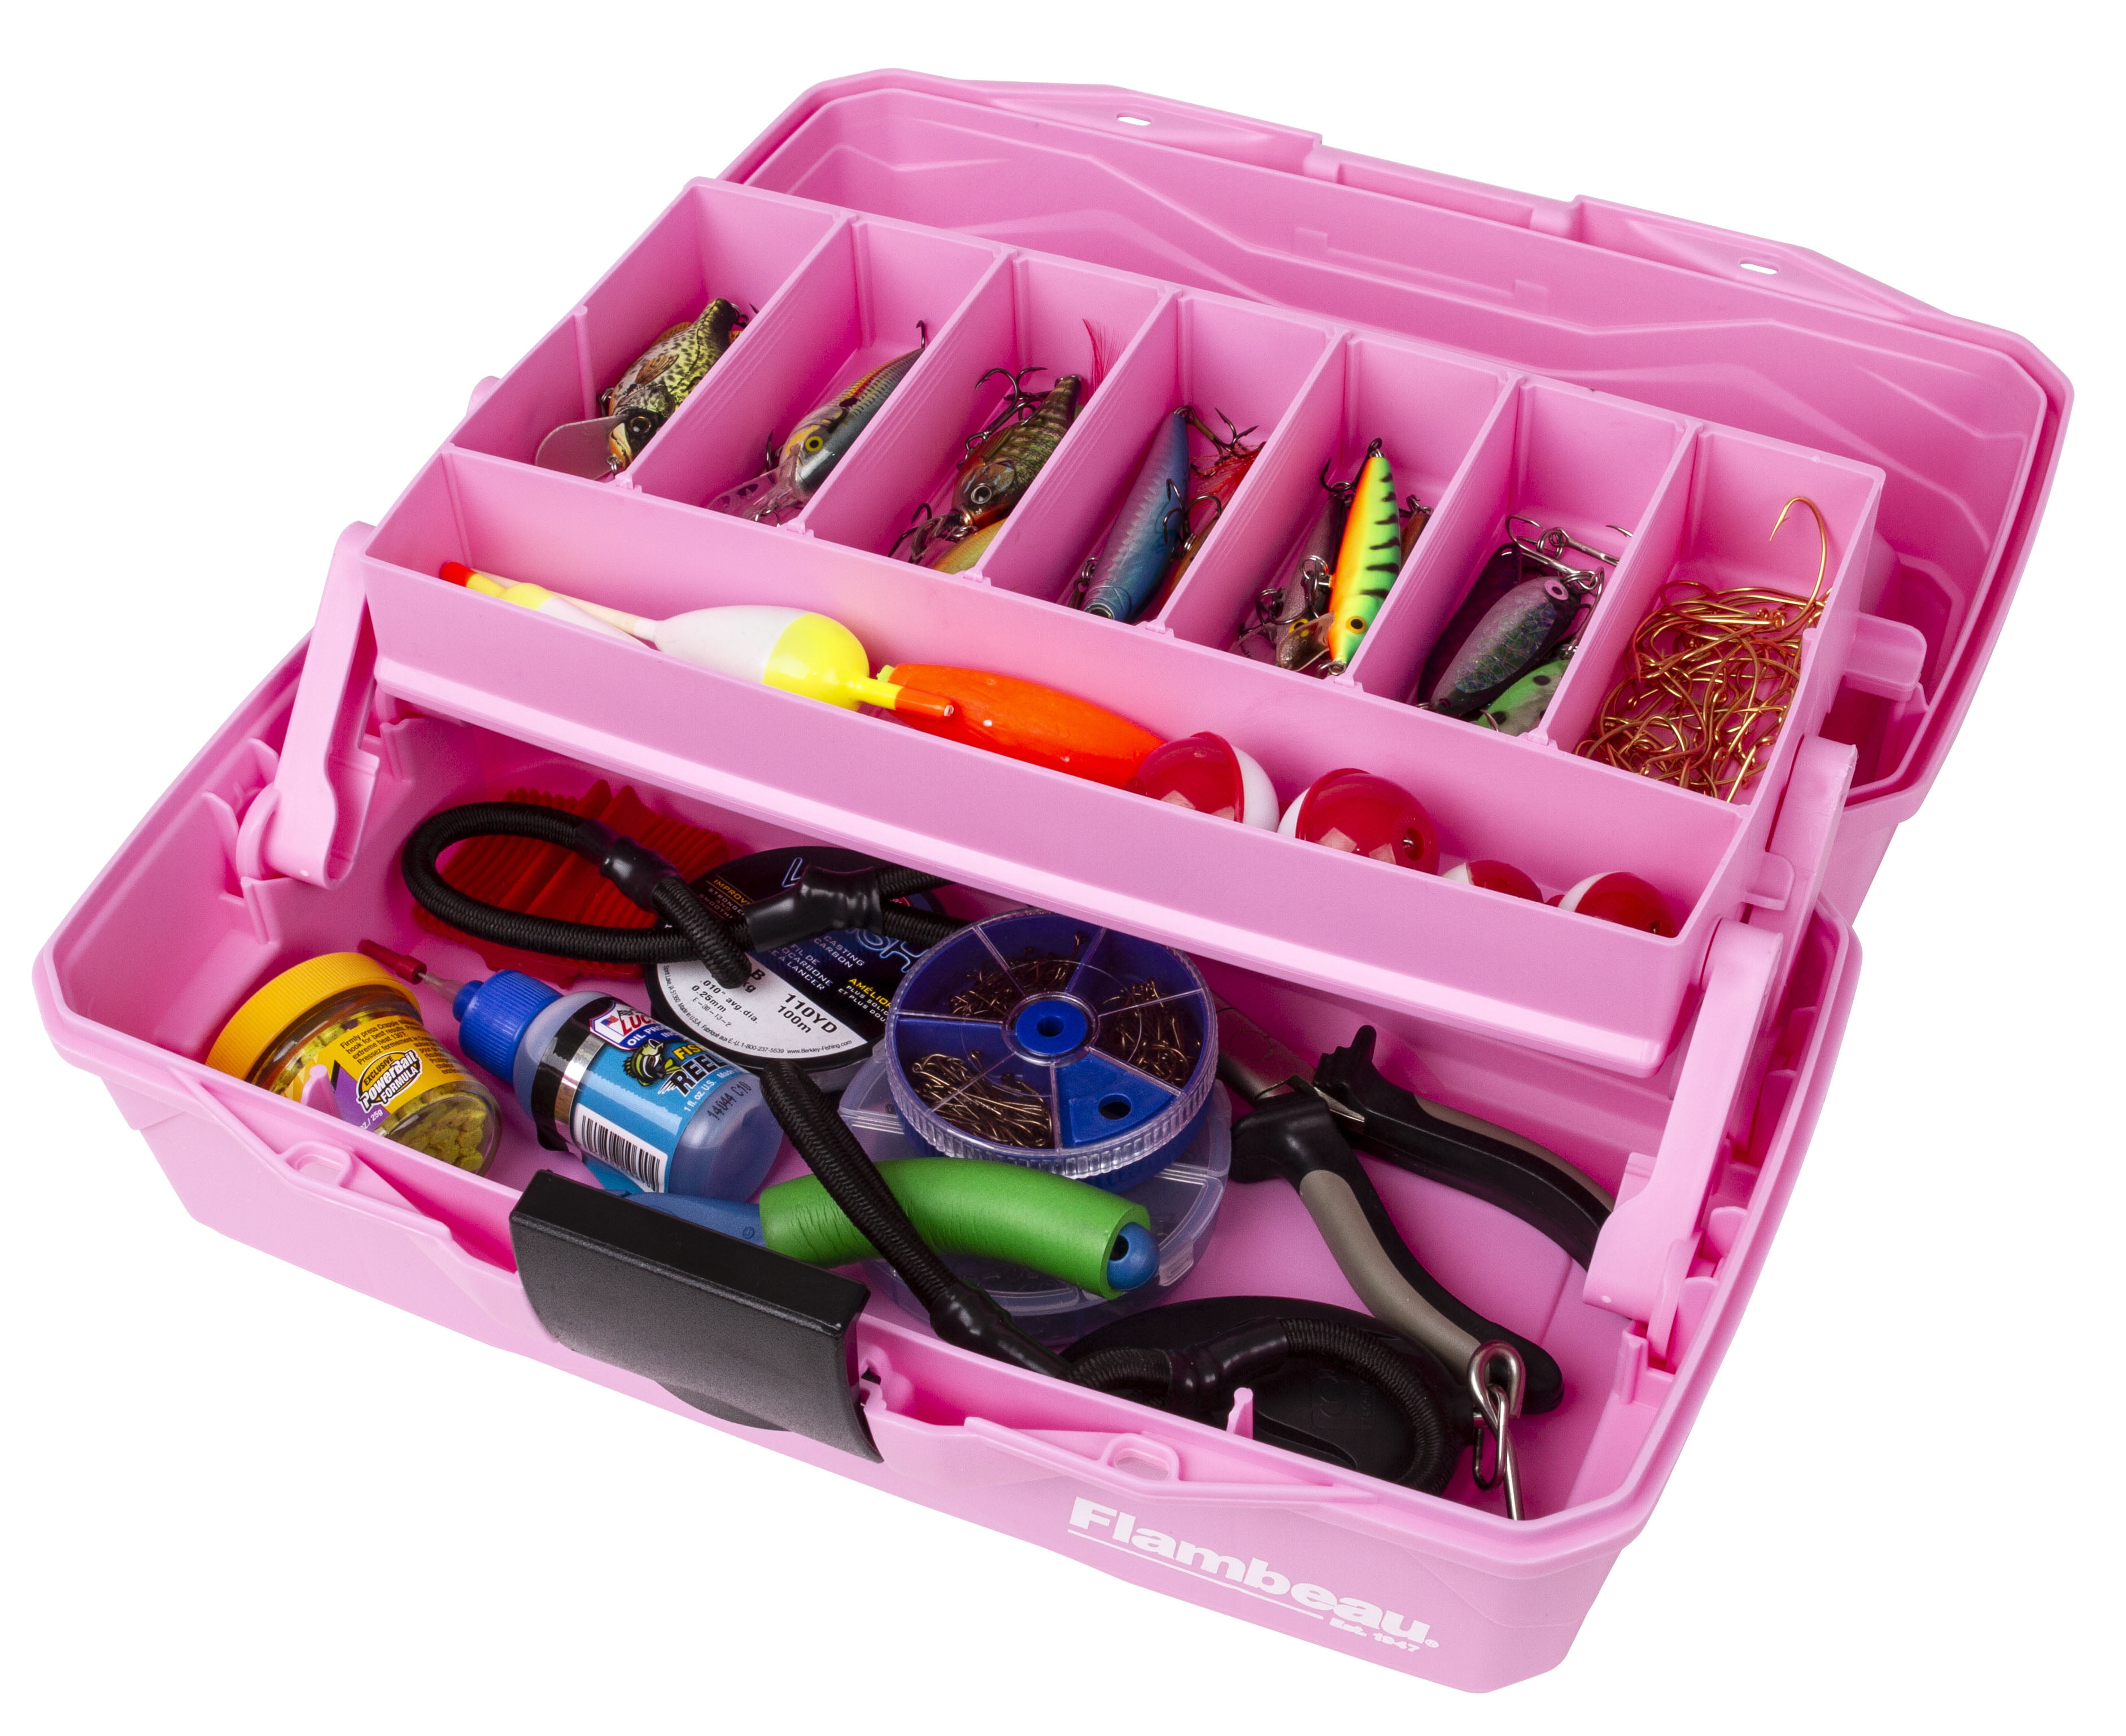 Flambeau 17-in Pink Plastic Lockable Tool Box at